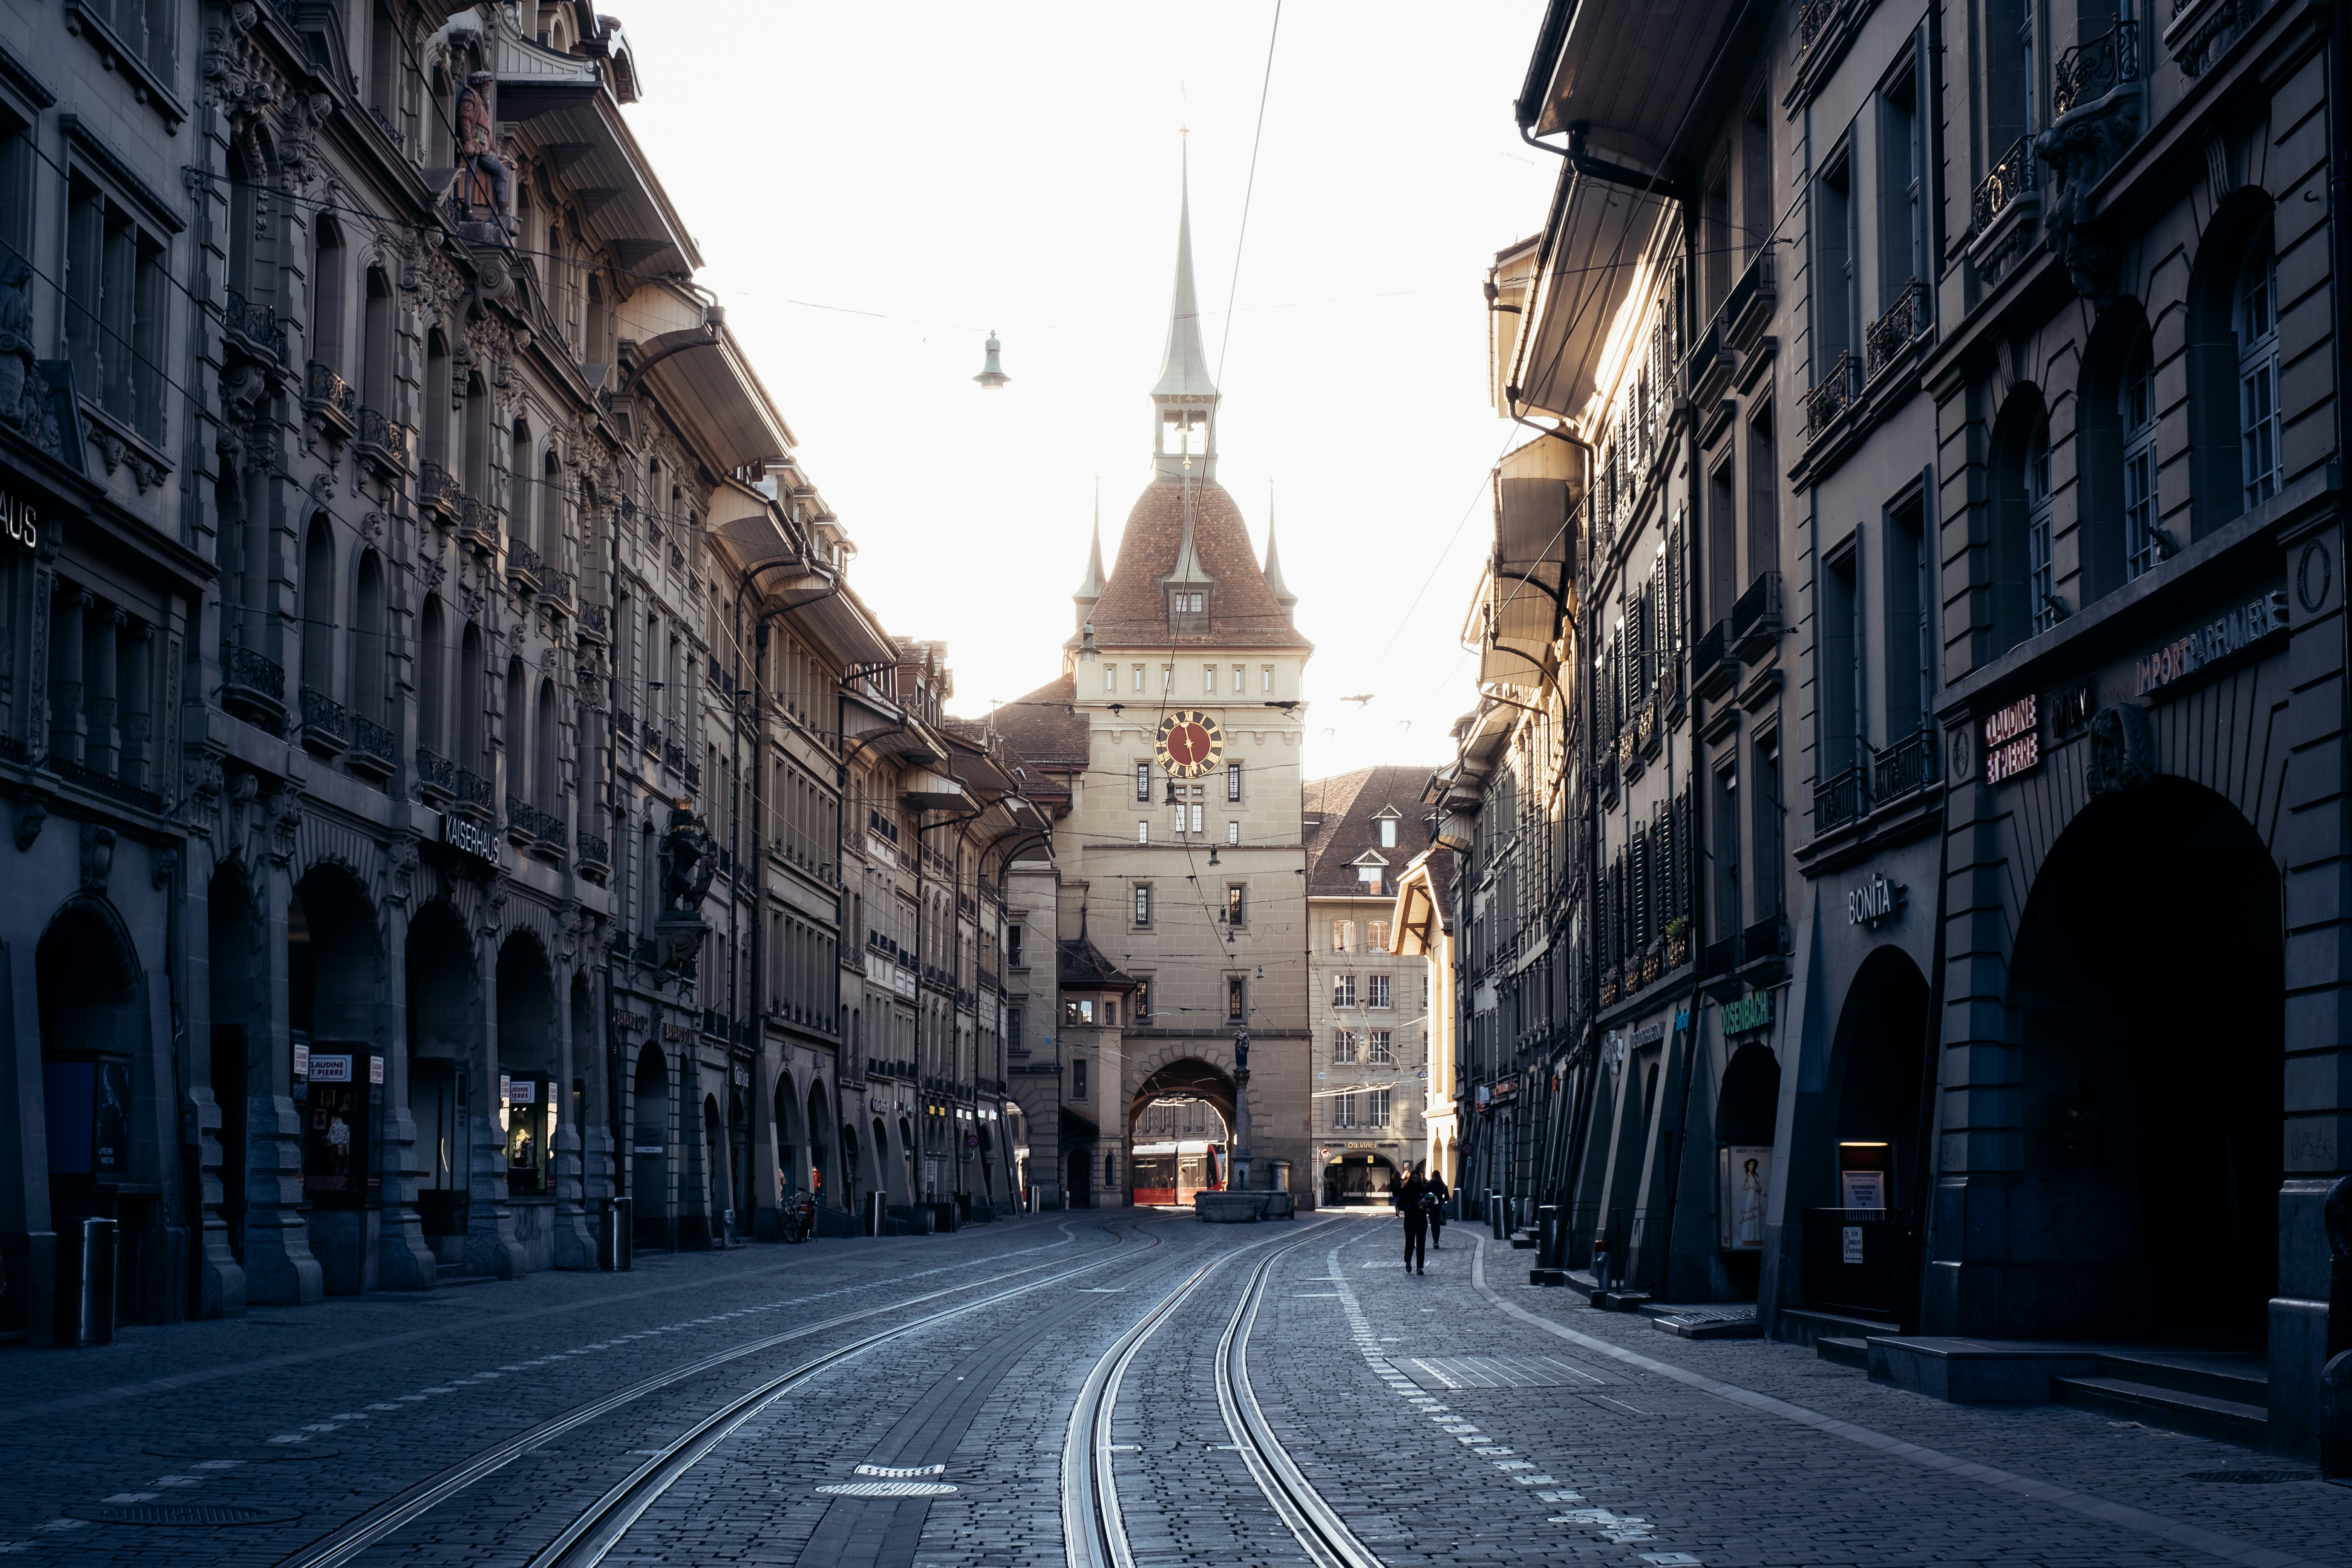 The heart of Switzerland's capital city, Bern.